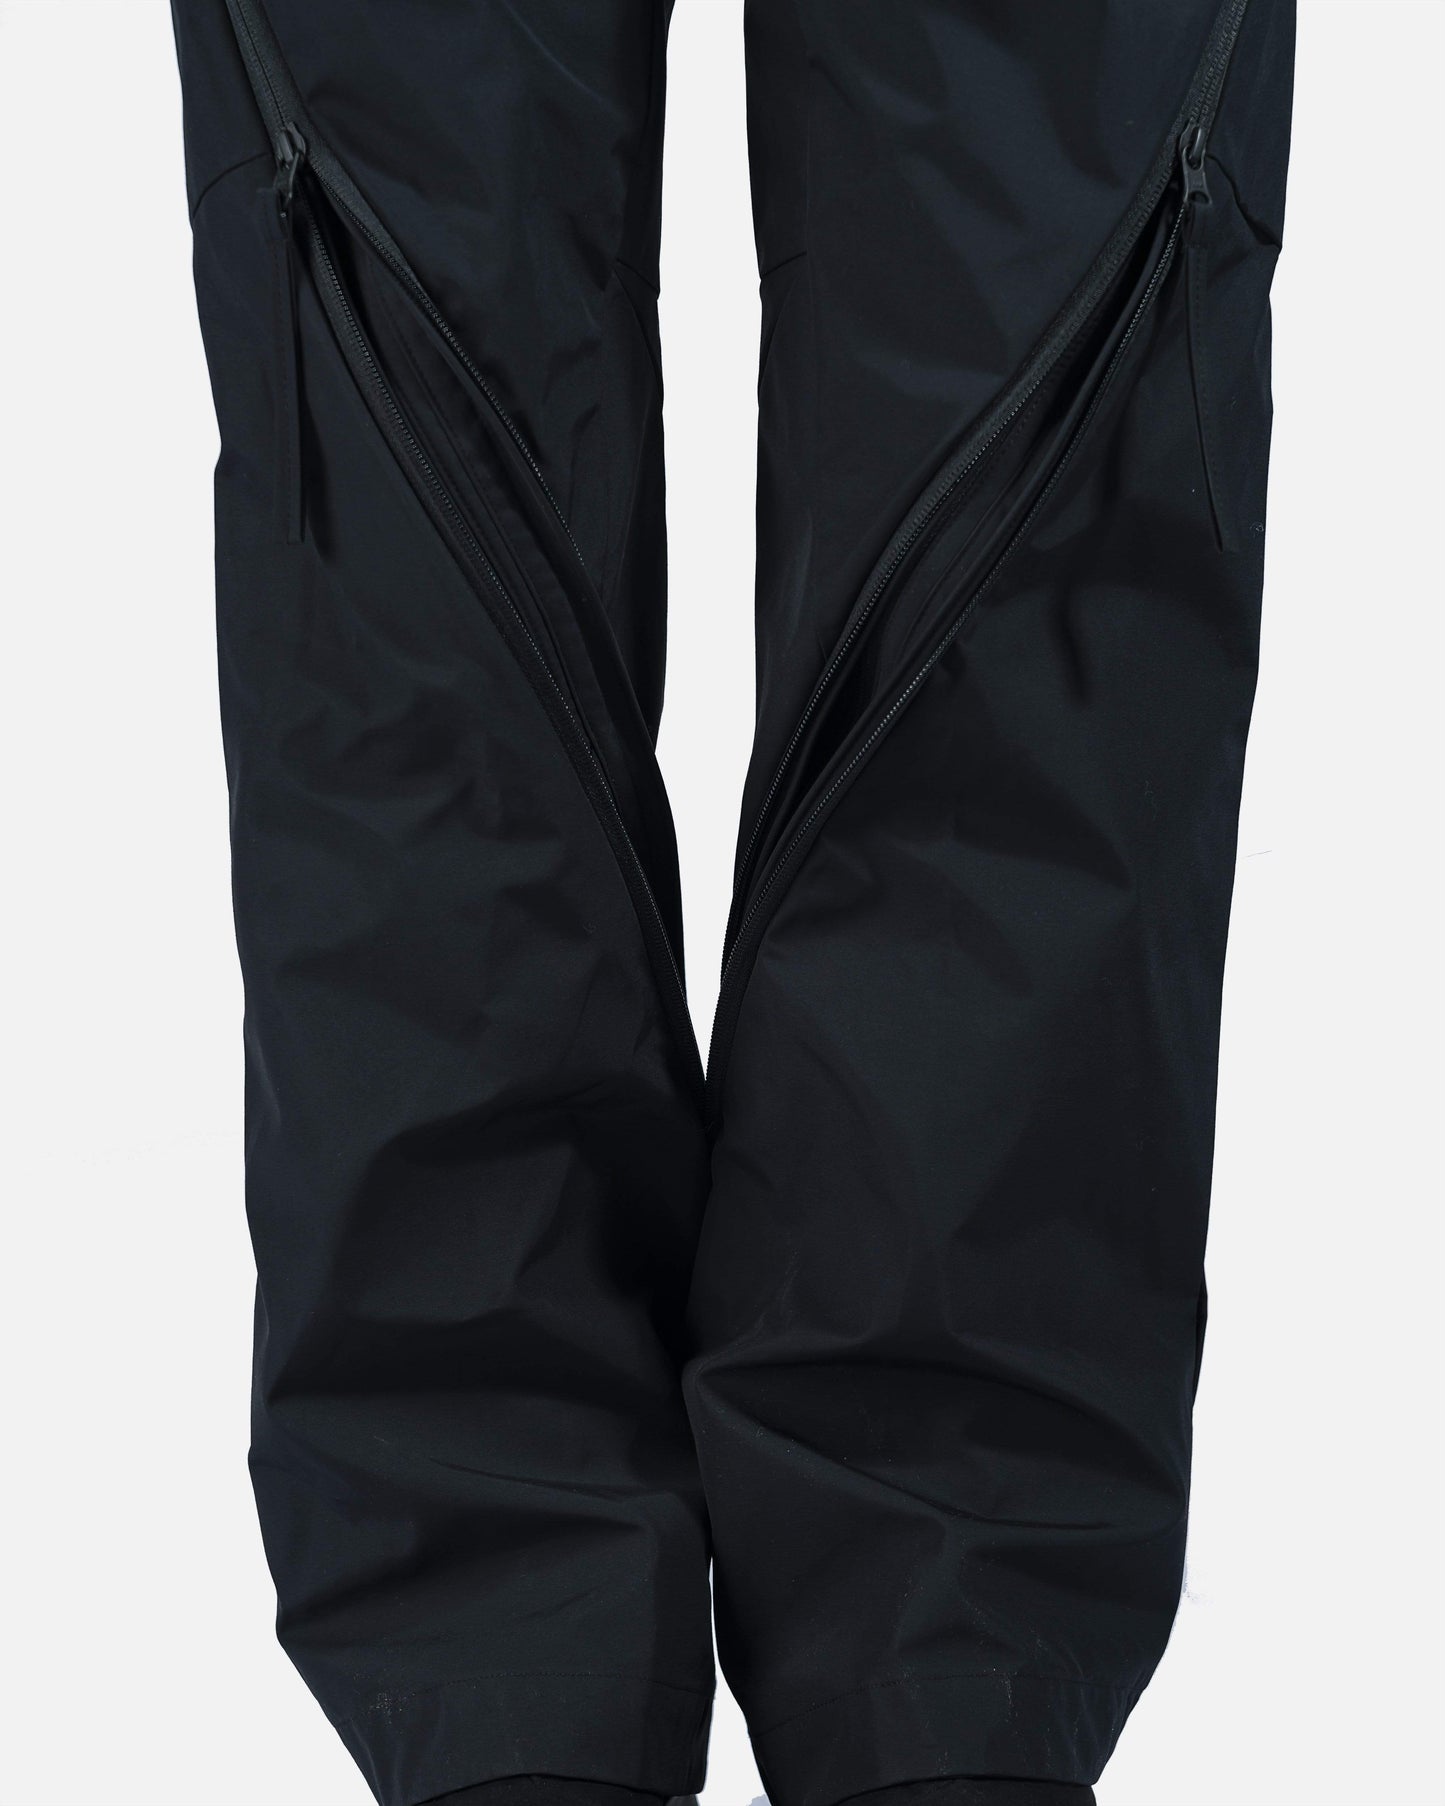 POST ARCHIVE FACTION (P.A.F) Men's Pants 4.0+ Technical Pants Center in Black